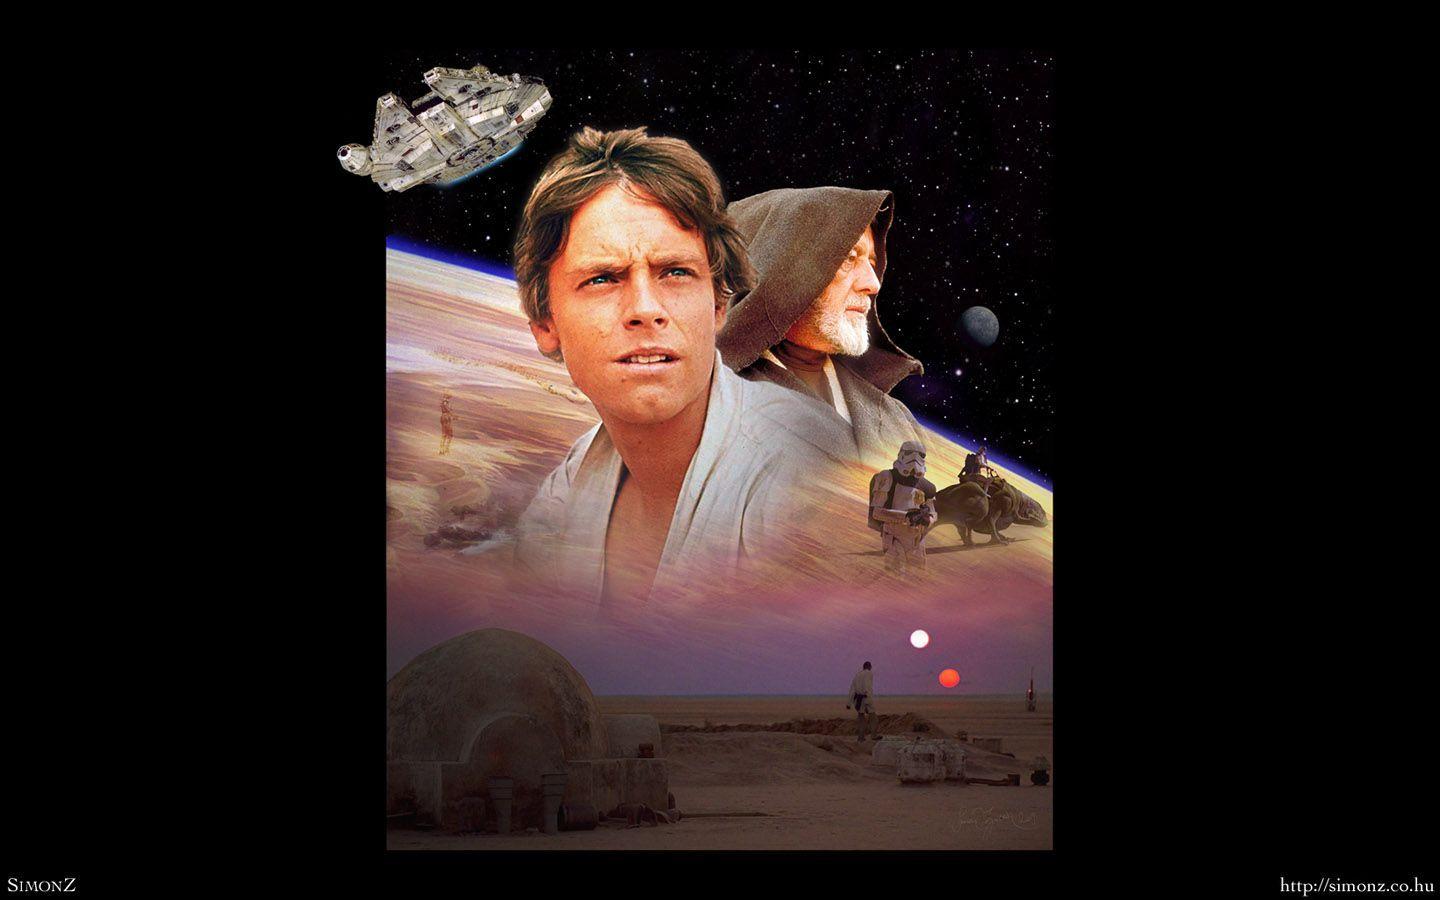 Luke Skywalker Wallpapers - Wallpaper Cave1440 x 900